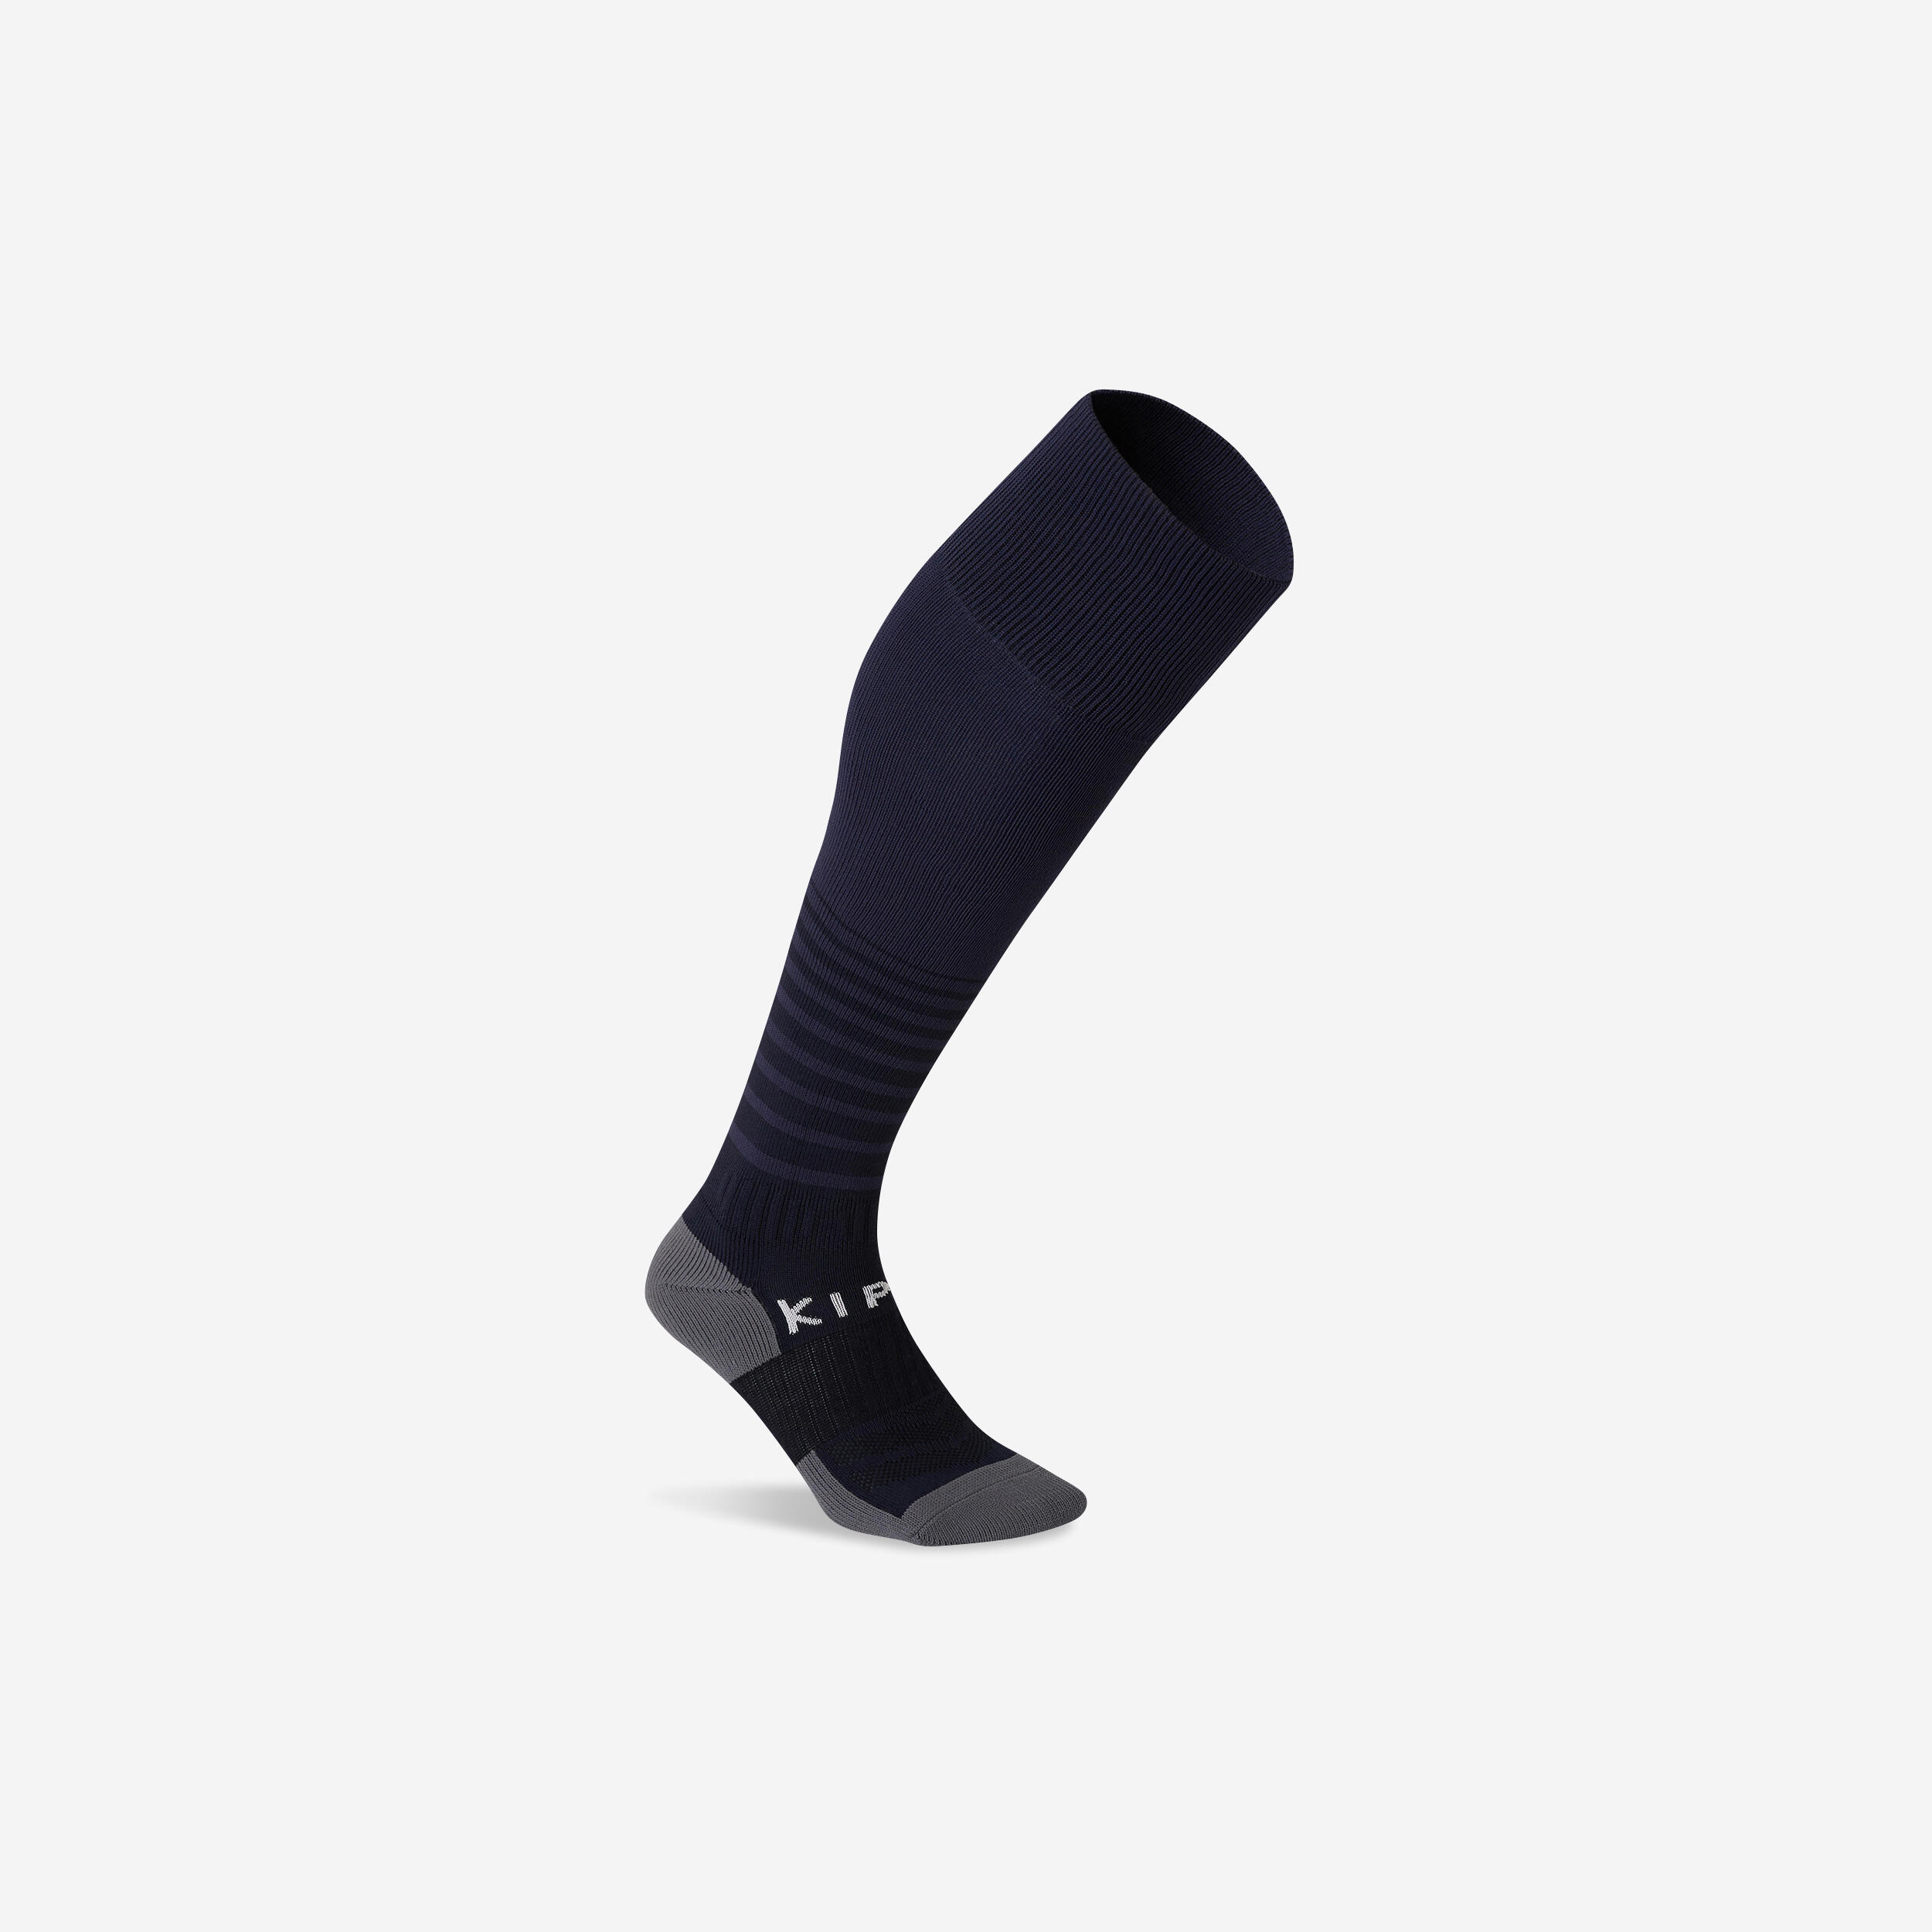 Boys Youth Football Socks Grip Breathable Non-Slip PE Wear